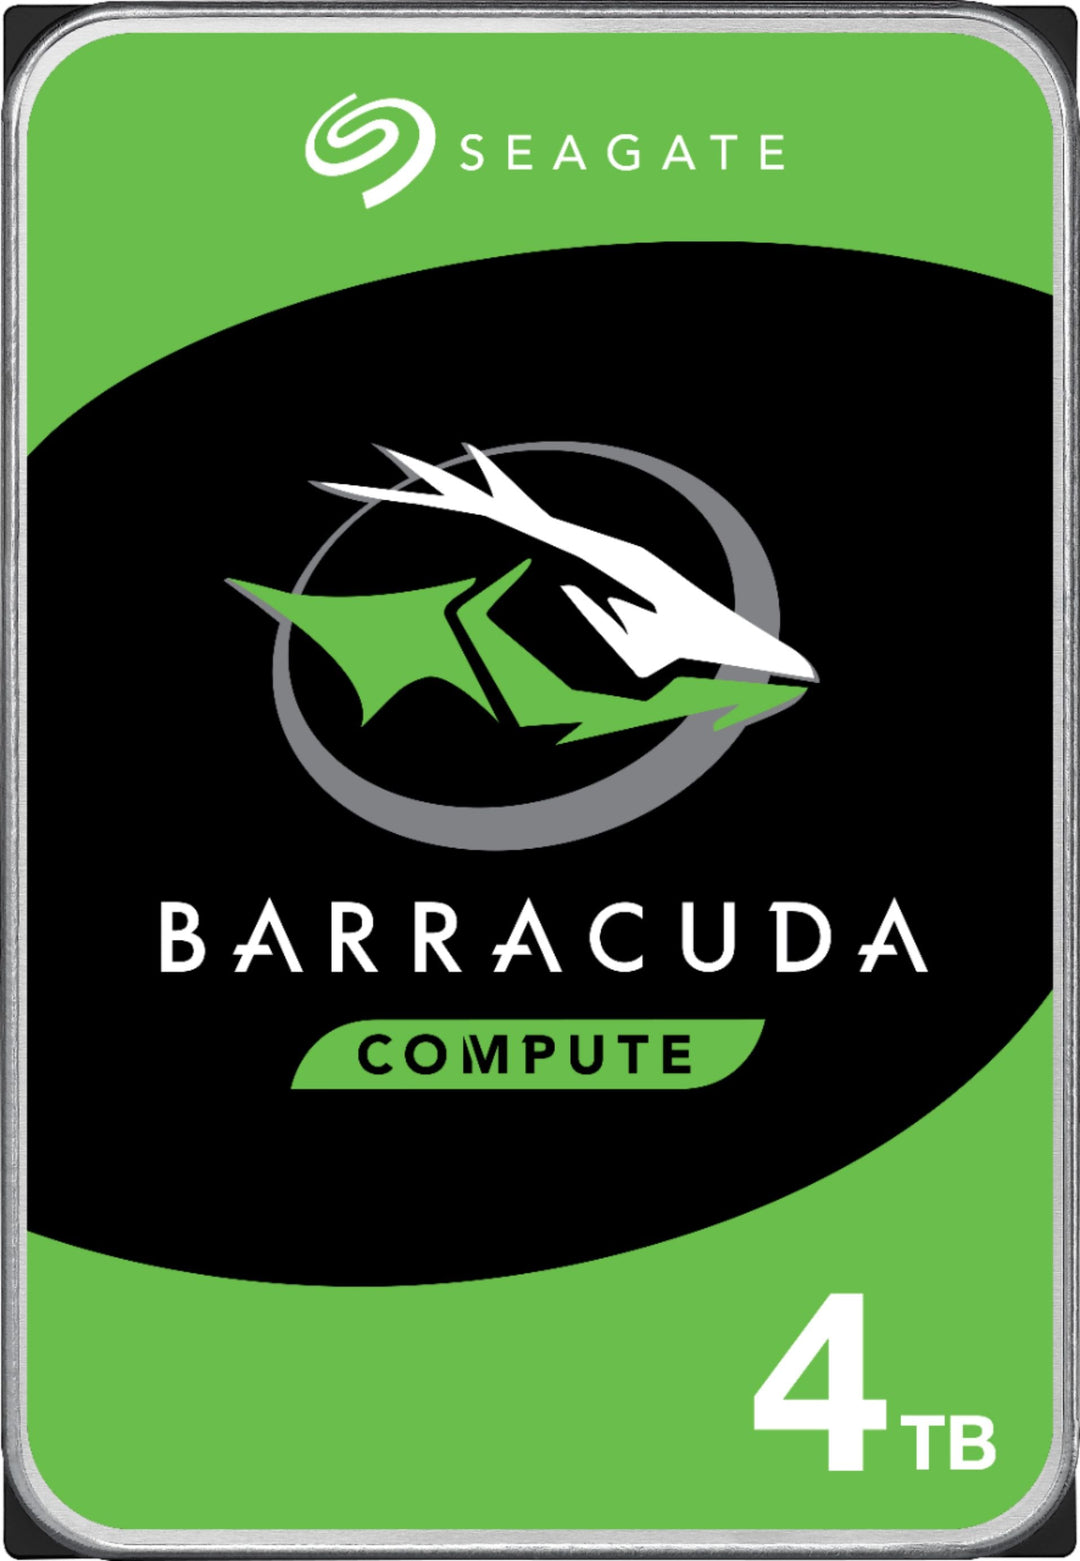 Seagate - Barracuda 4TB Internal SATA Hard Drive for Desktops_0